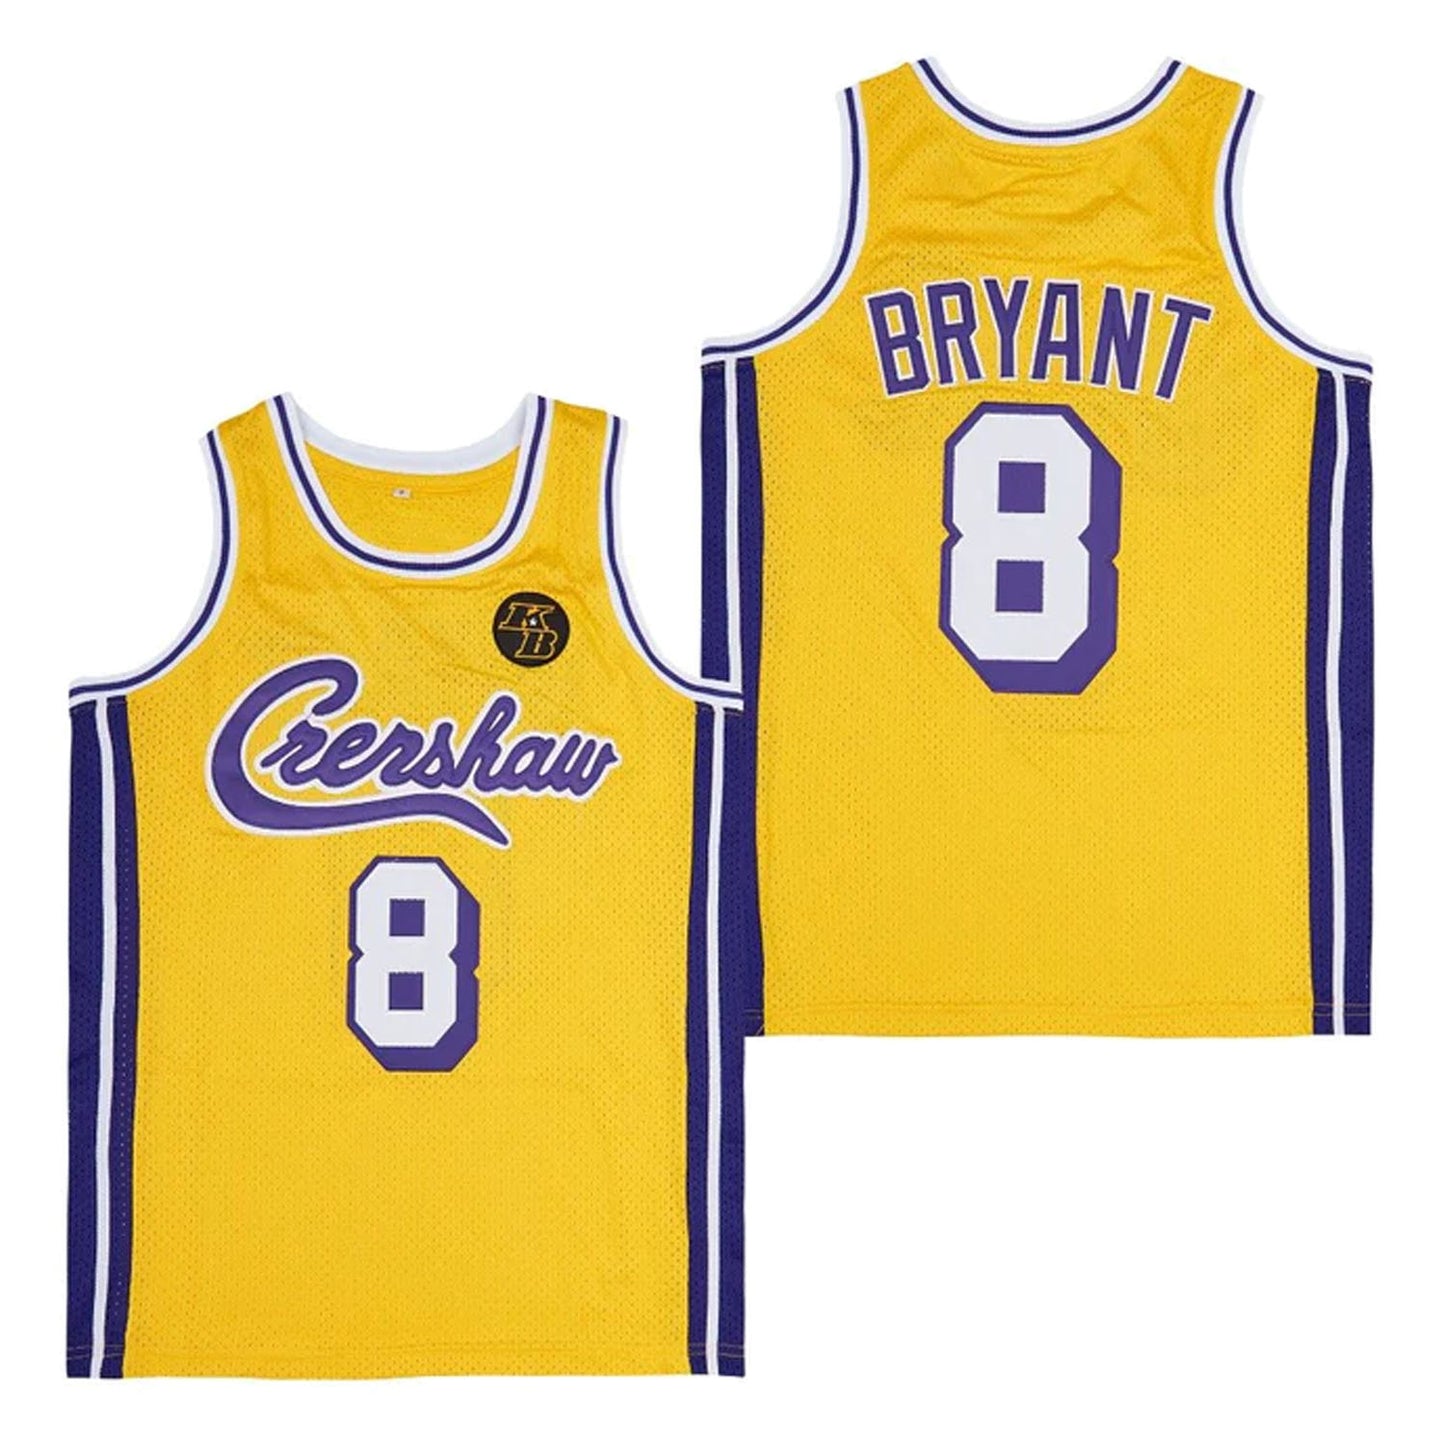 Kobe Bryant #8 Crenshaw x Los Angeles Lakers Jersey